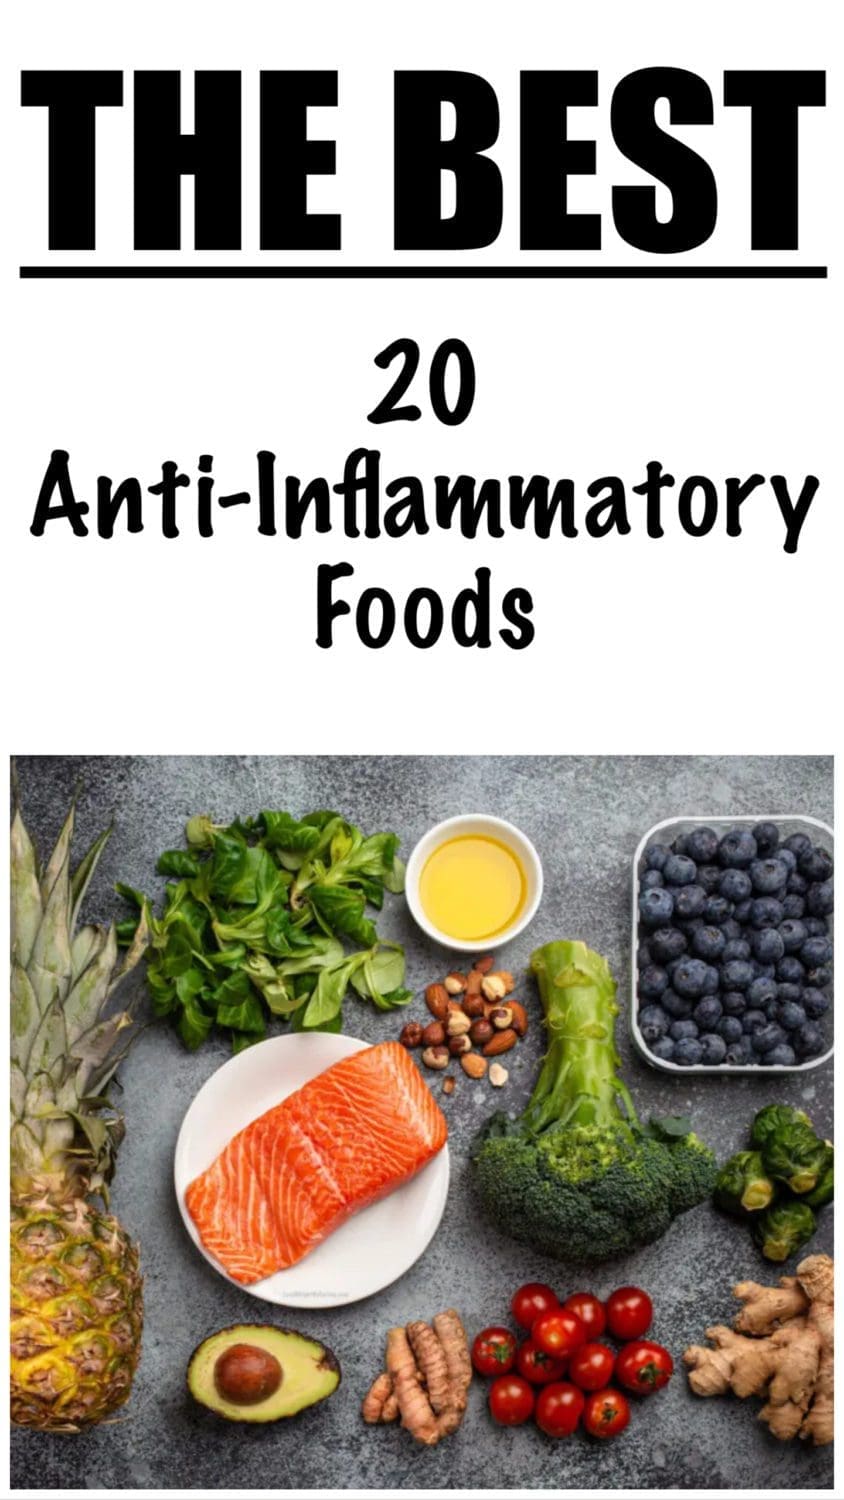 The BEST 20 Anti-Inflammatory Foods